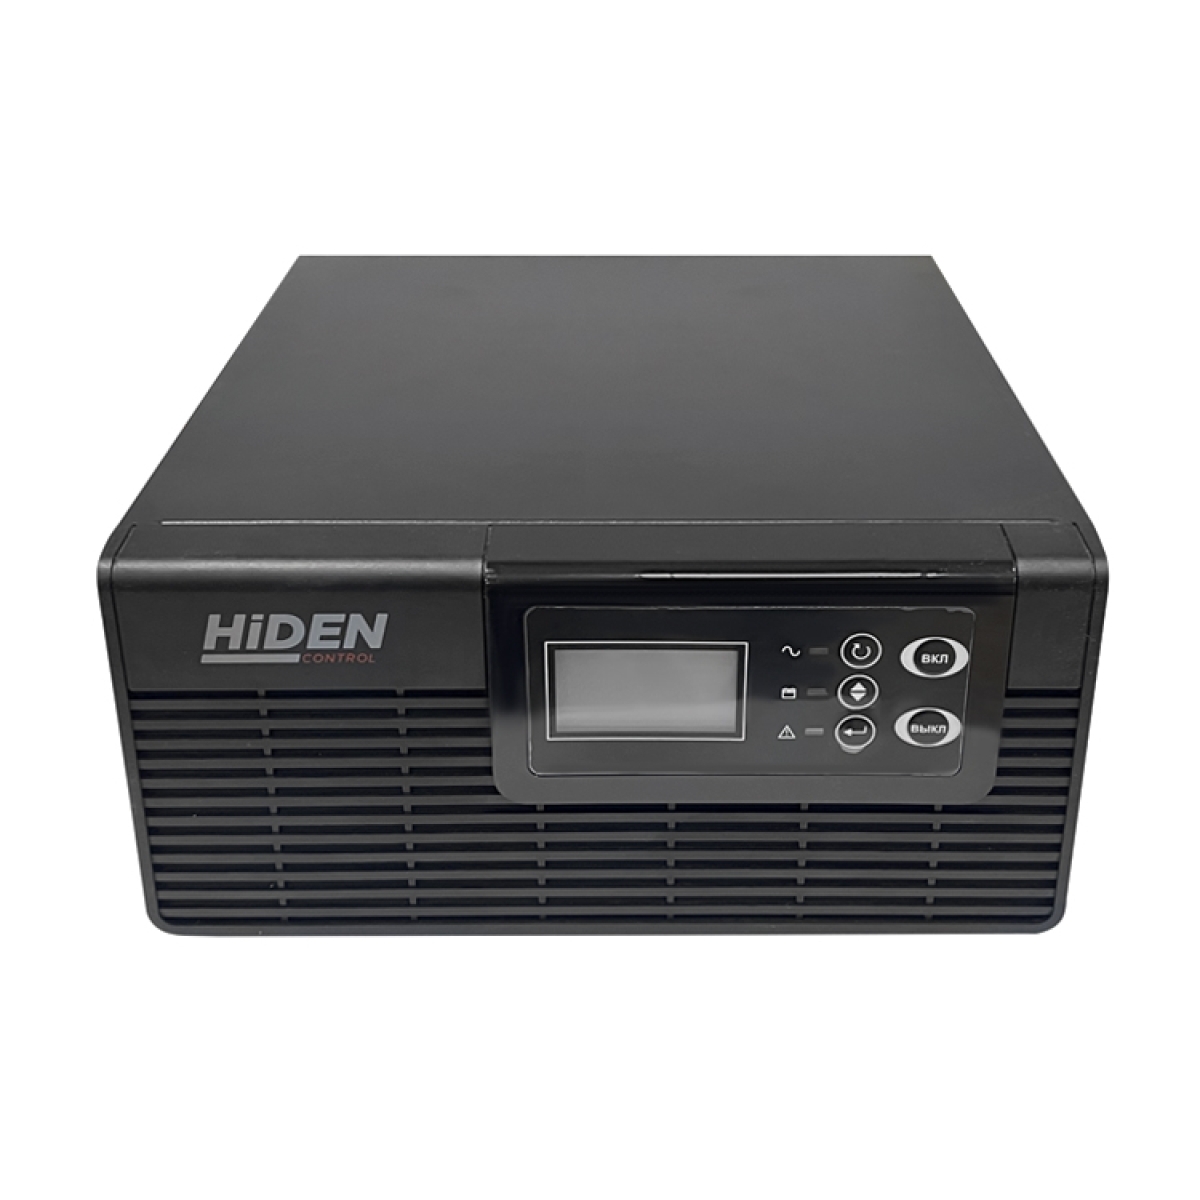 ИБП Hiden Control HPS20-1012, вид спереди